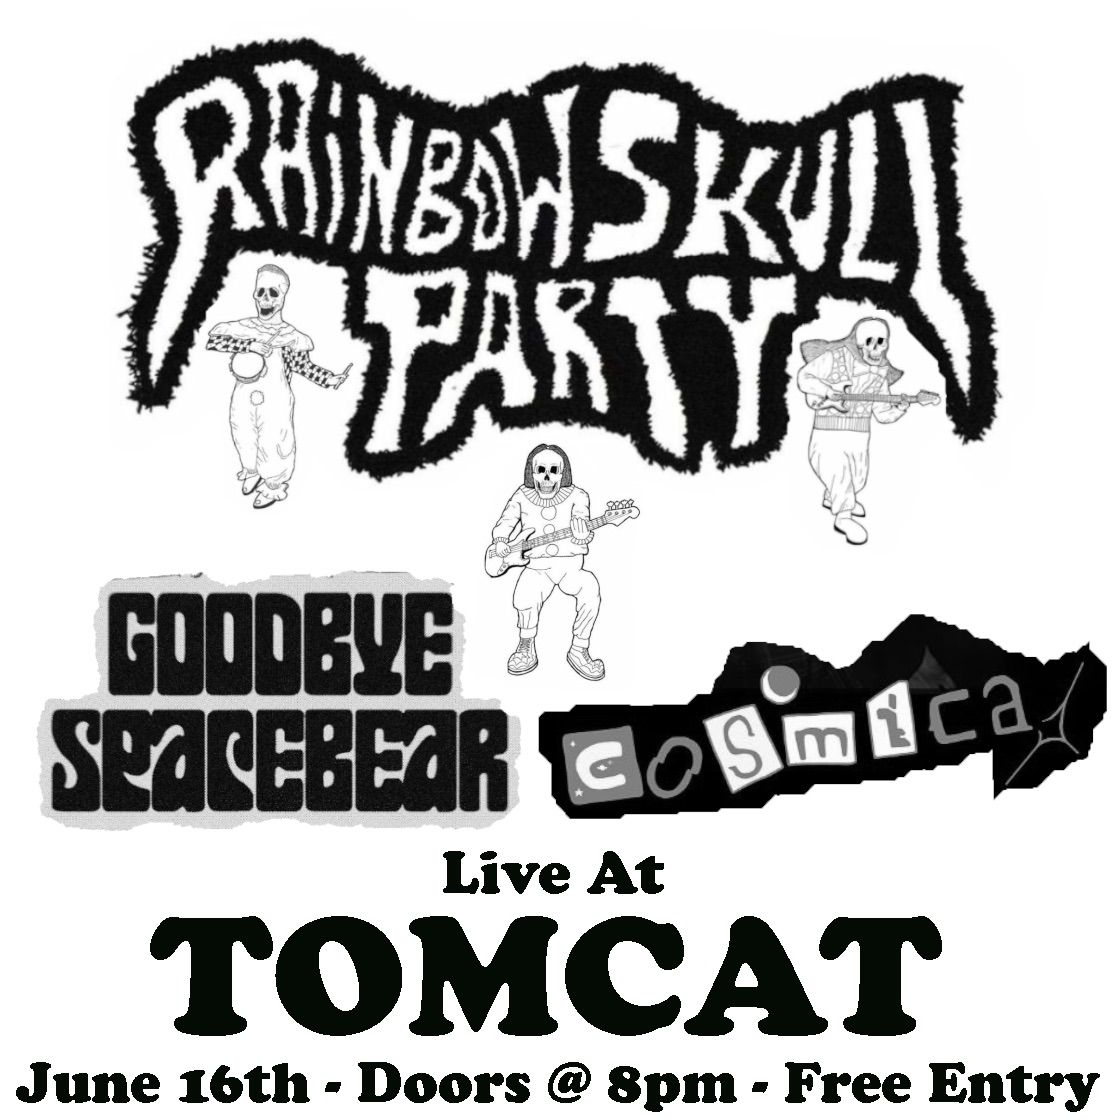 Rainbow Skull Party @ Tomcat w\/ Goodbye Spacebear and Cosmica